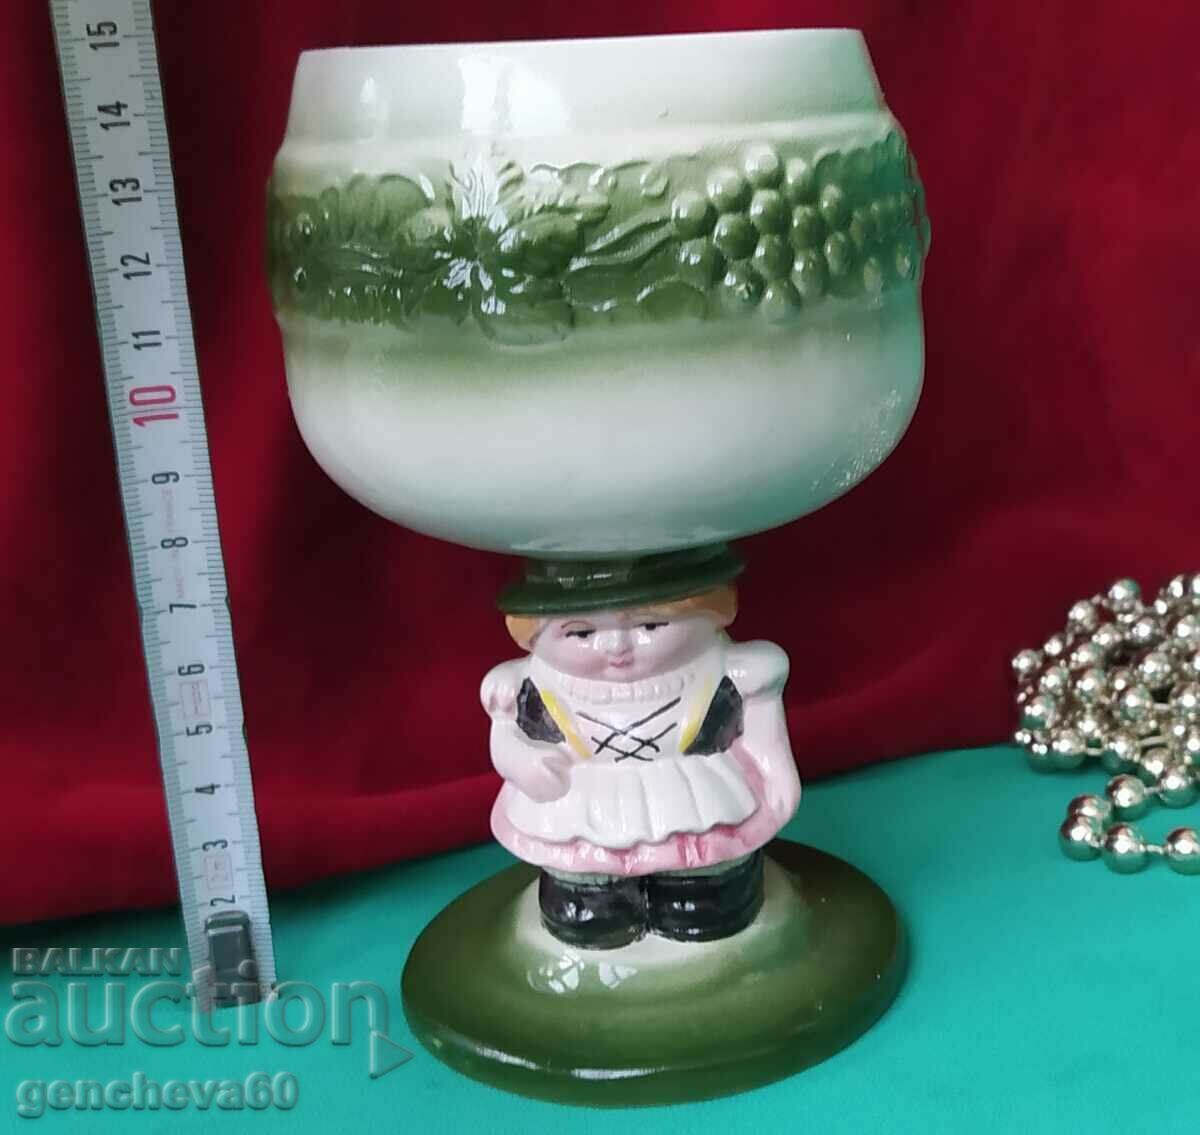 Interesting vintage wine glass